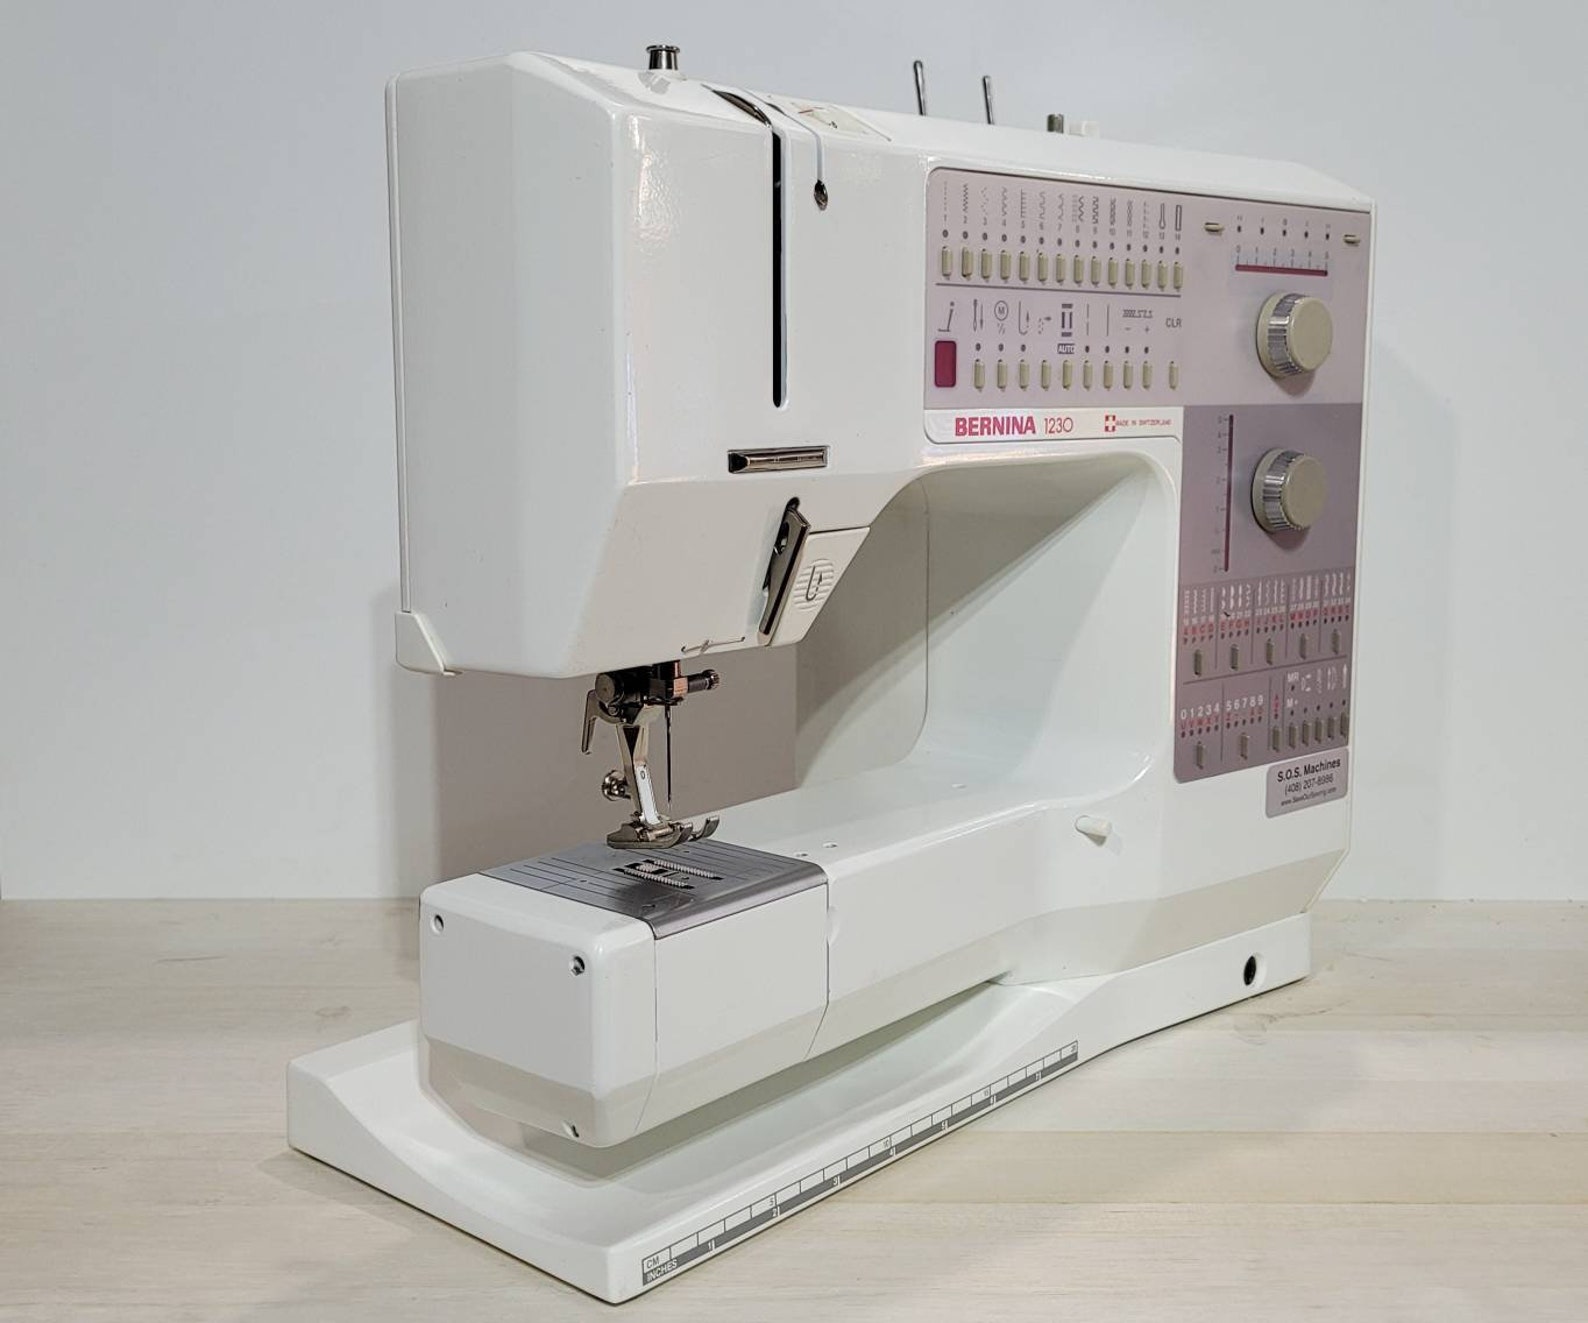 bernina-1230-sewing-machine-professionally-serviced-2-yr-etsy